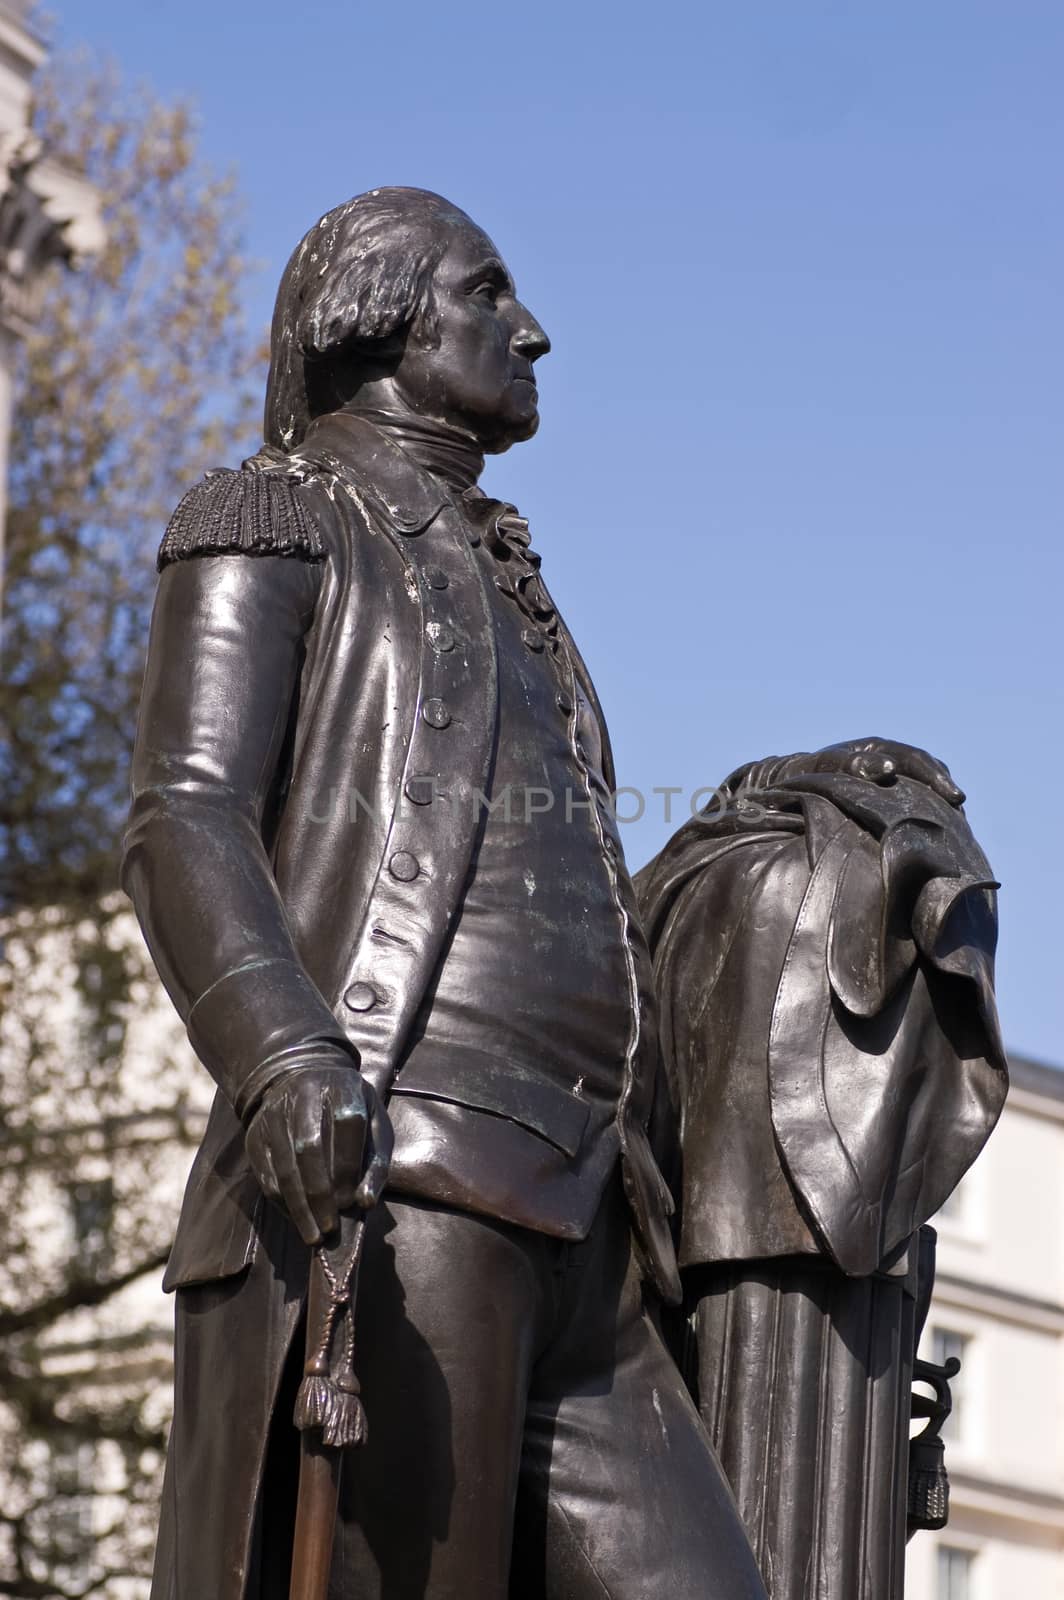 George Washington Statue, London by BasPhoto